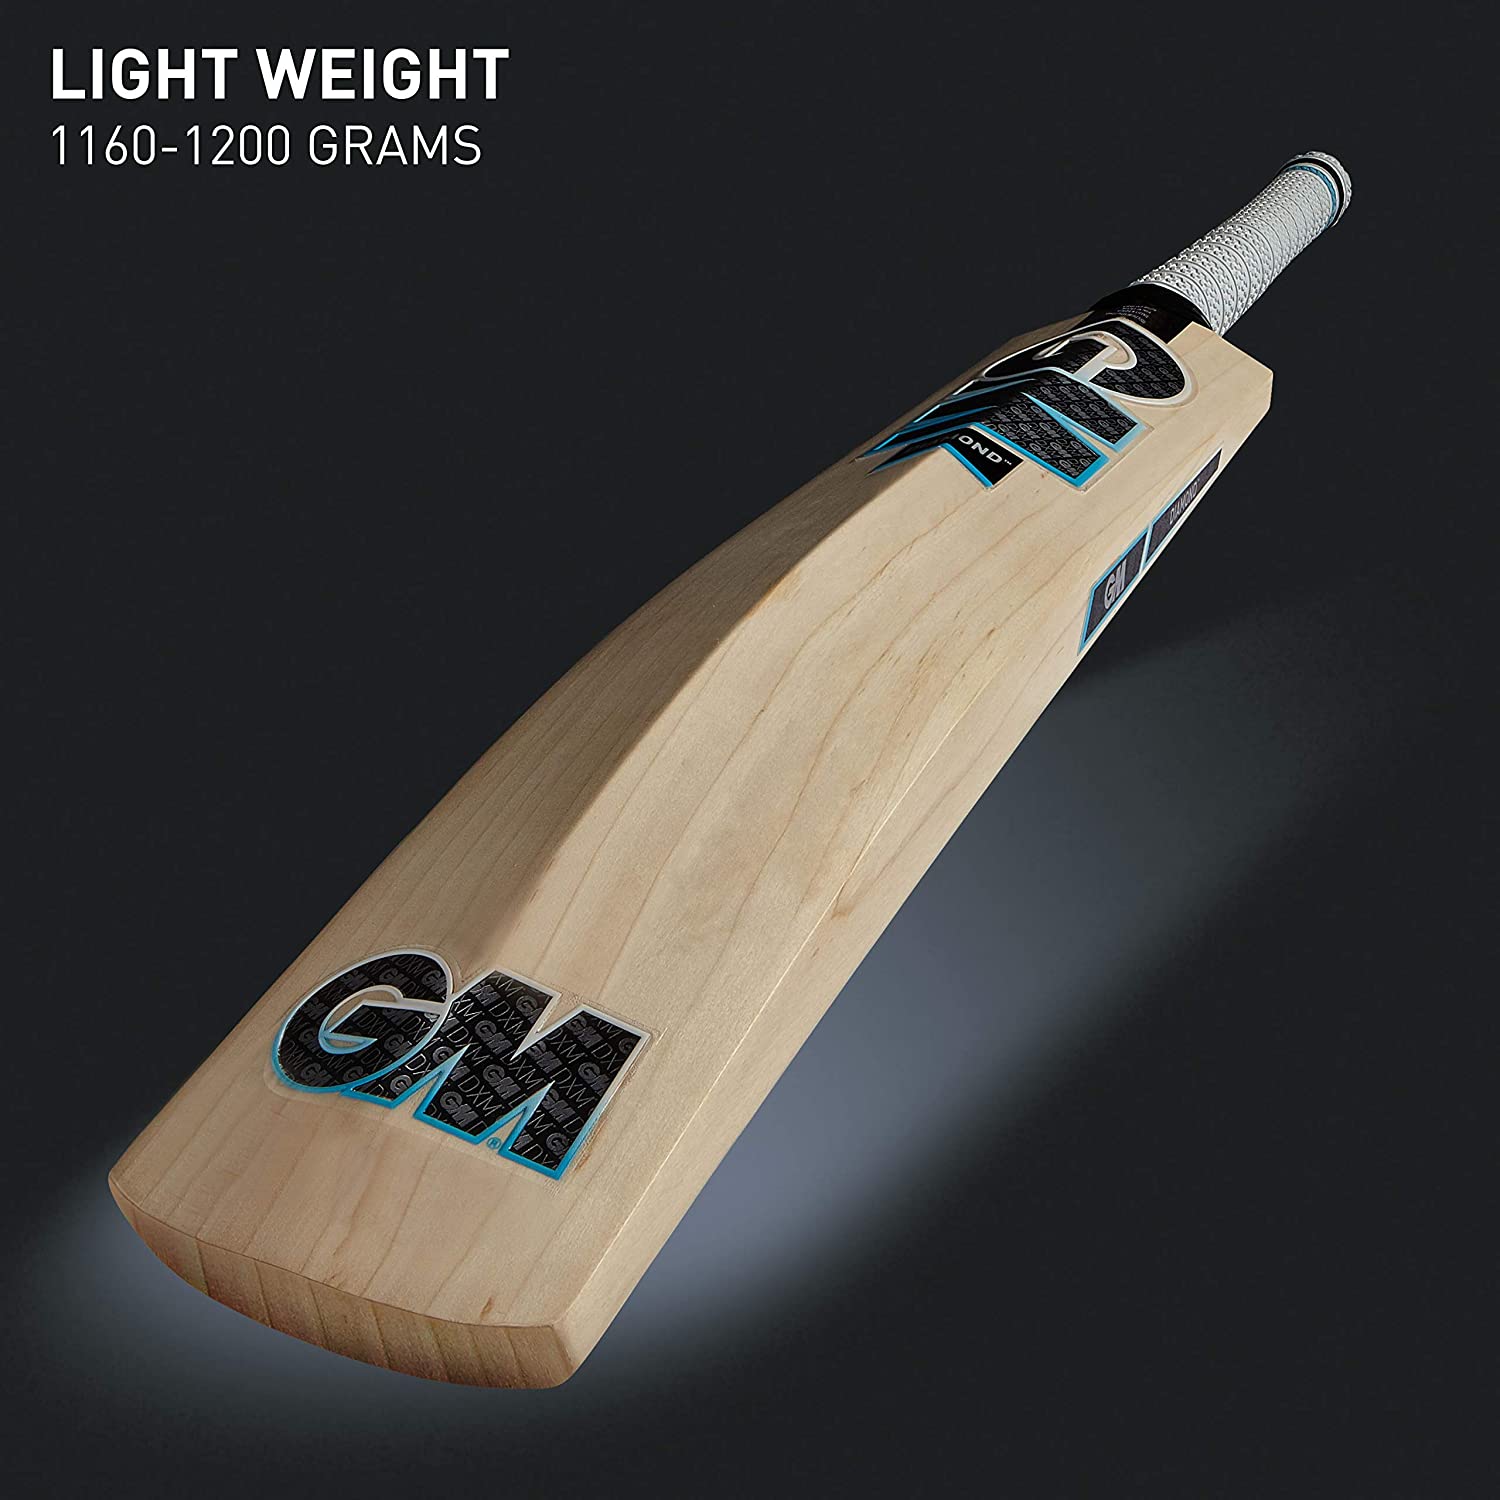 GM Diamond 606 English Willow Cricket Bat - Best Price online Prokicksports.com